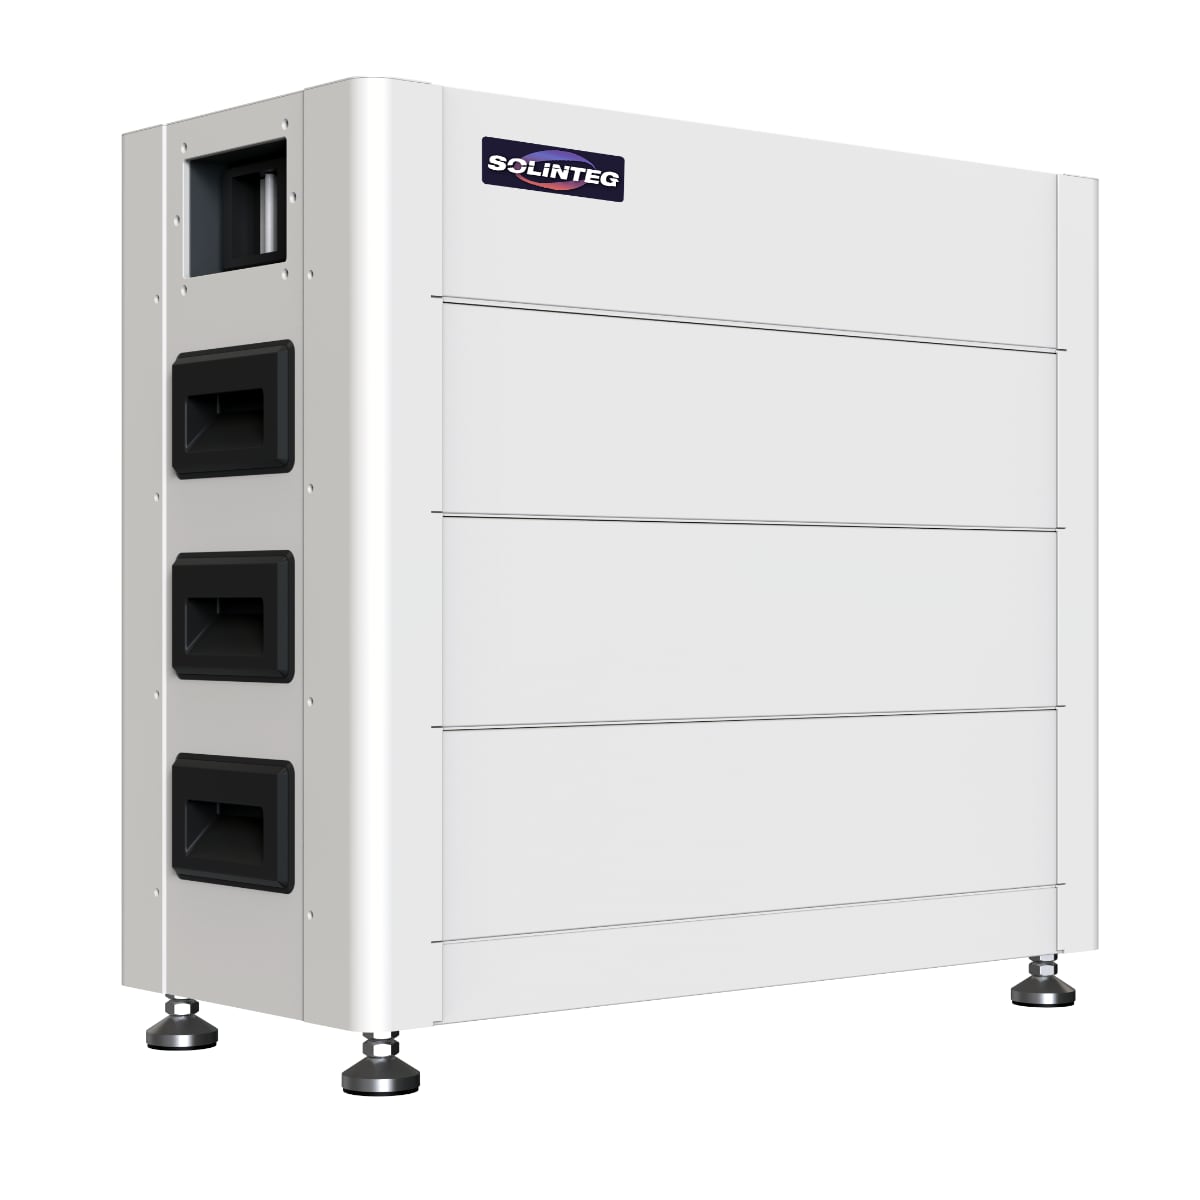 Solinteg 7-20kWh Storage (EBS-5150)